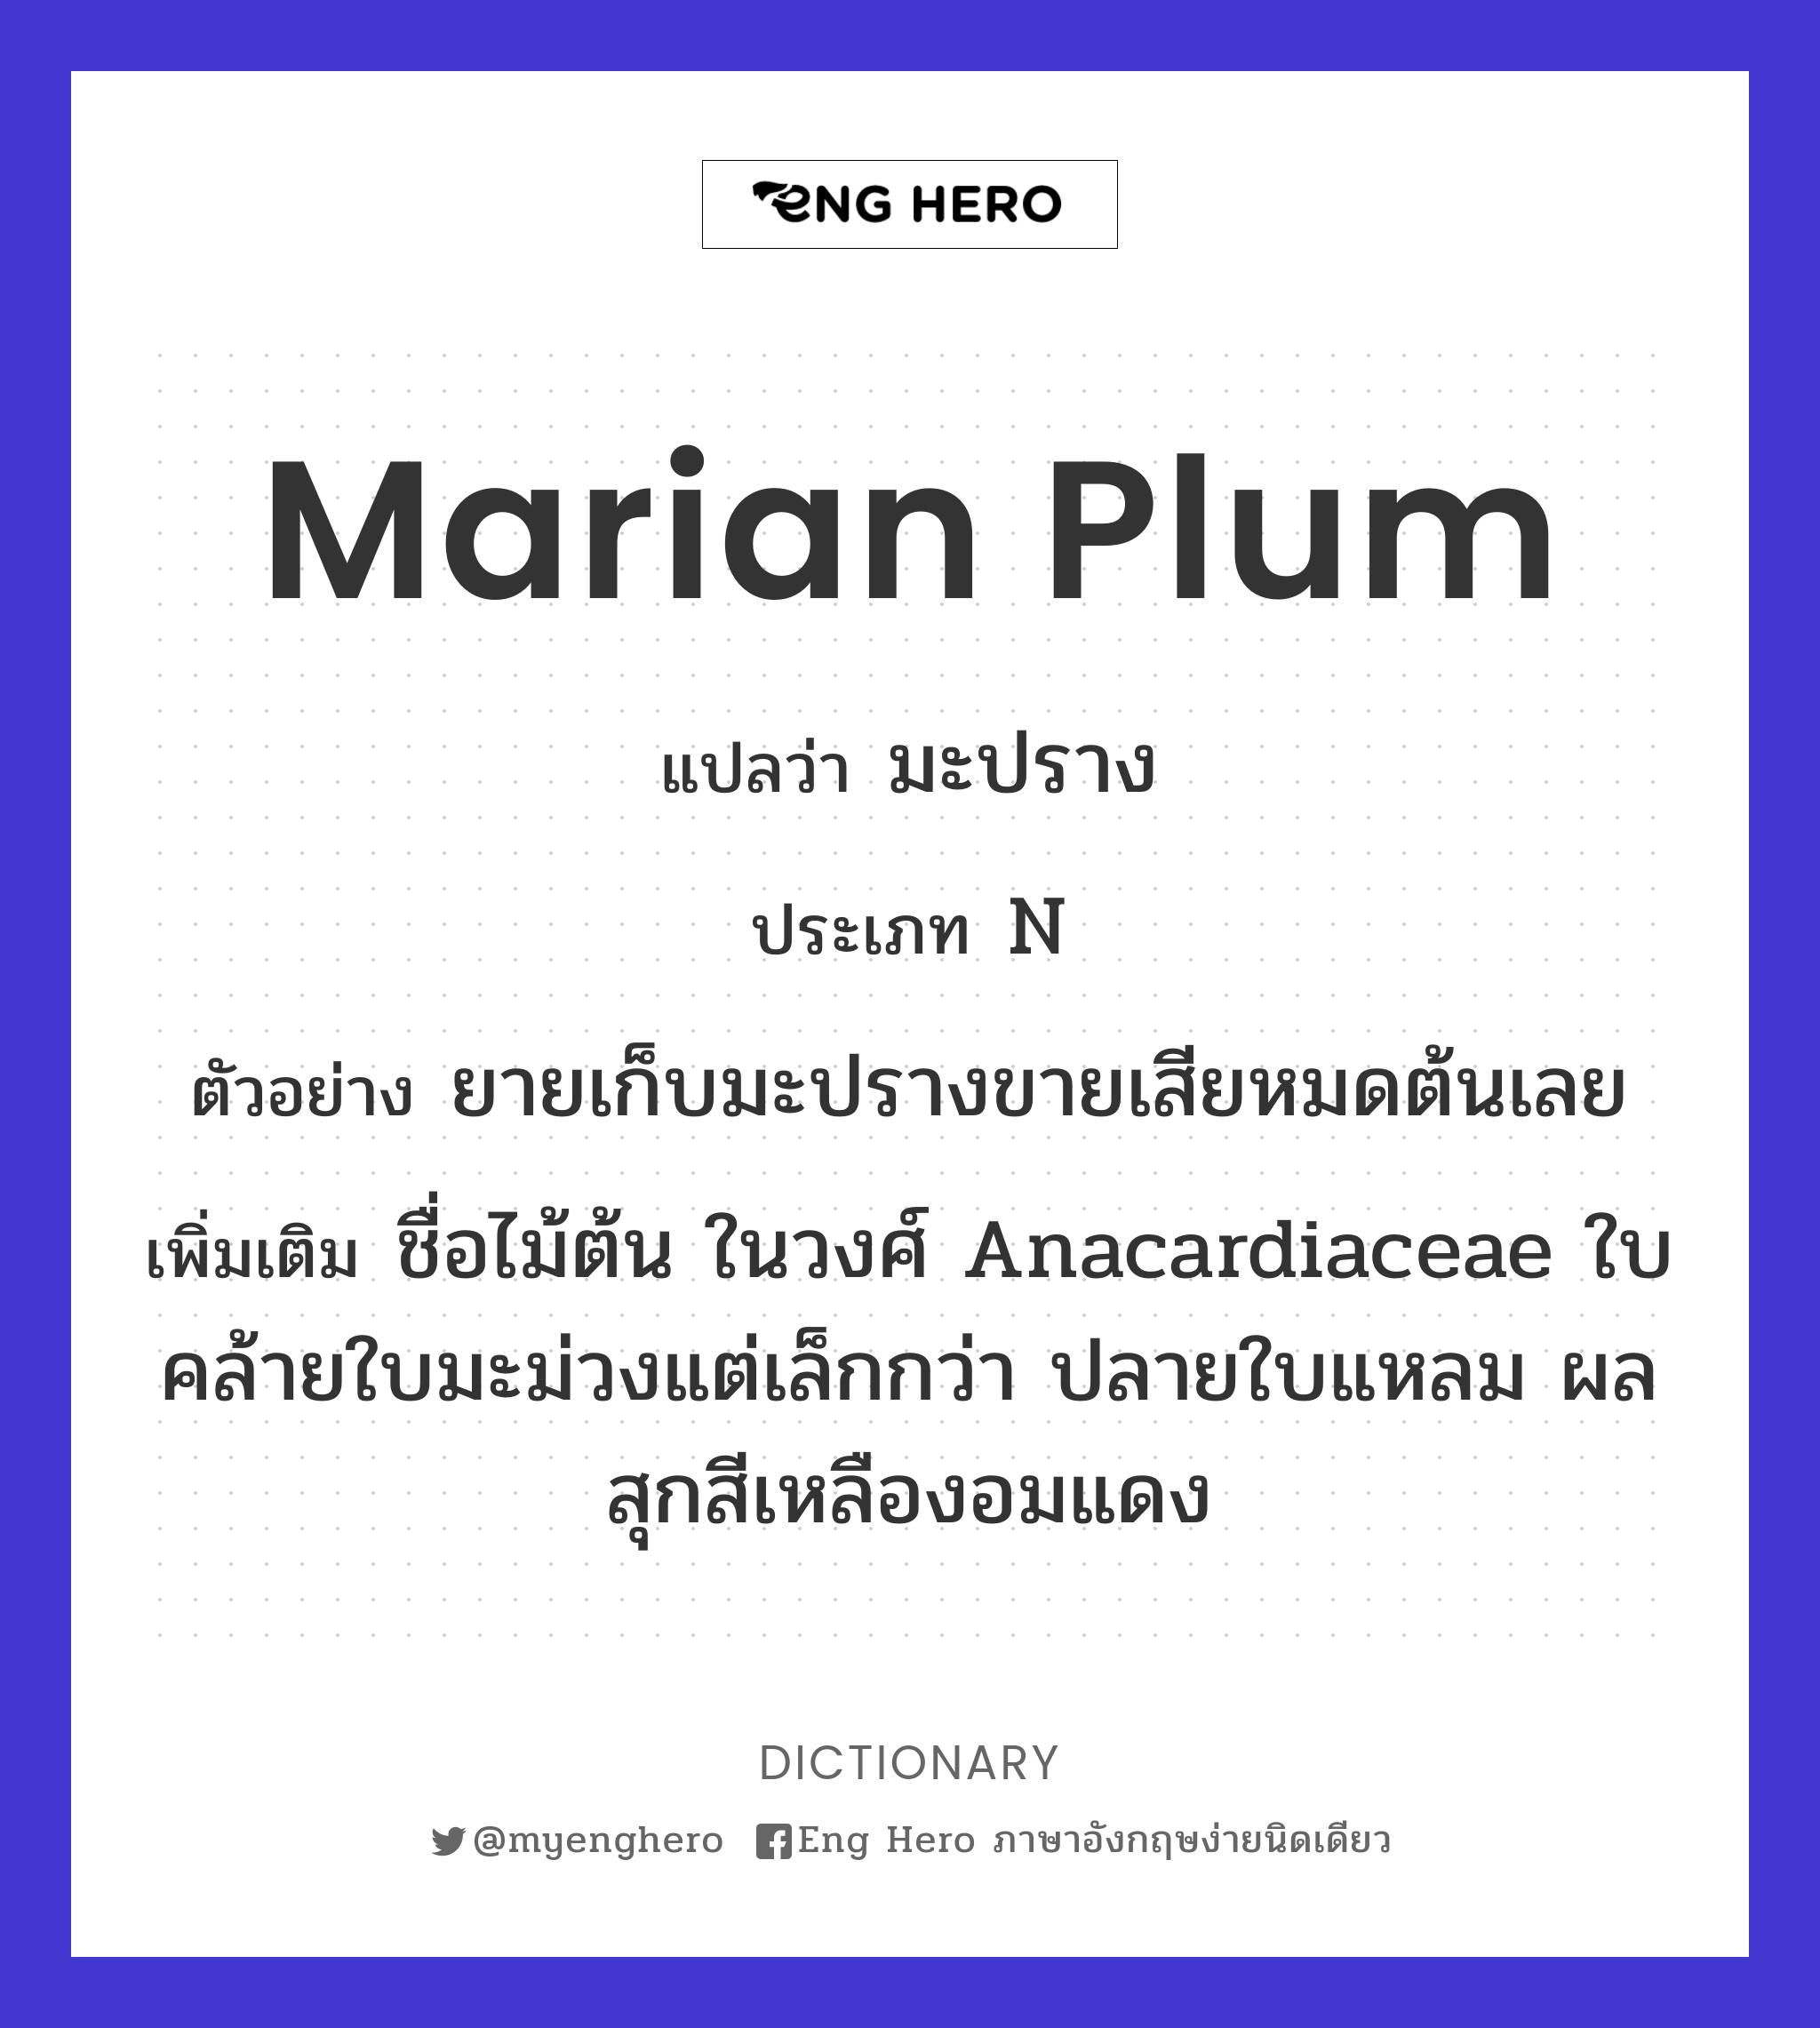 Marian plum